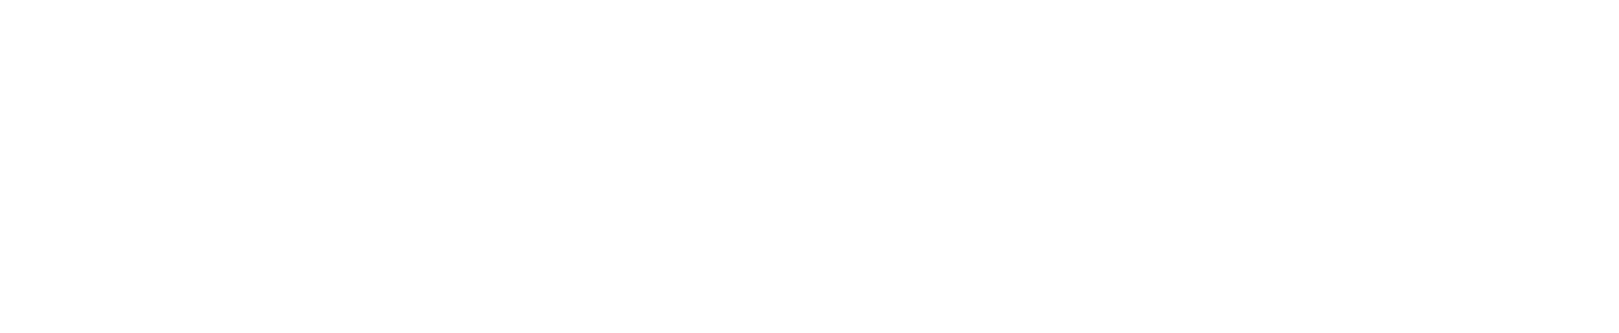 Energy Transfer Partners
 Logo groß für dunkle Hintergründe (transparentes PNG)